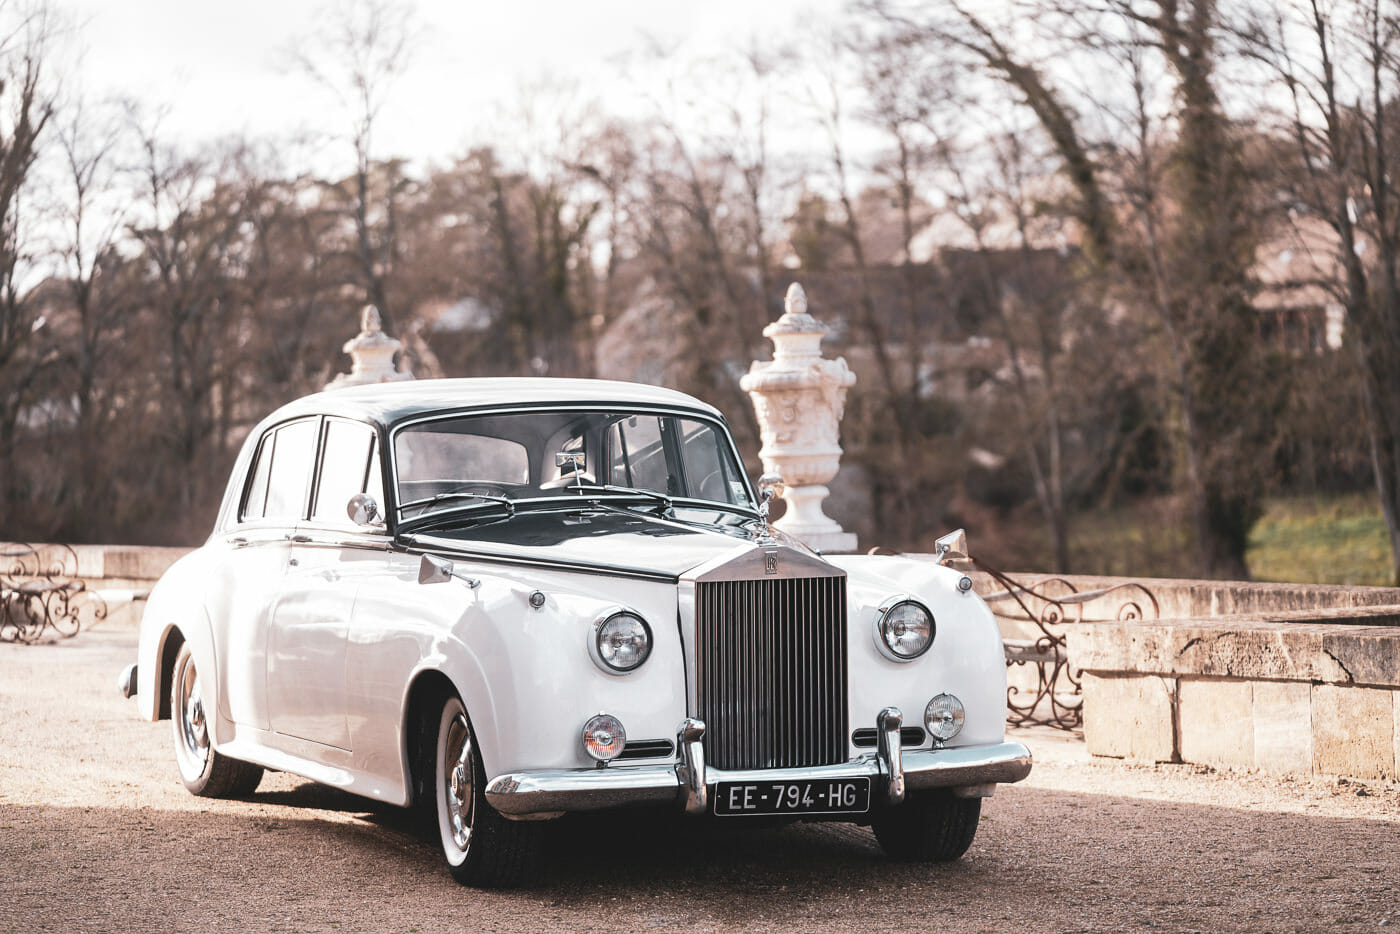 White vintage Rolls-Royce at Chateau de Villette in France